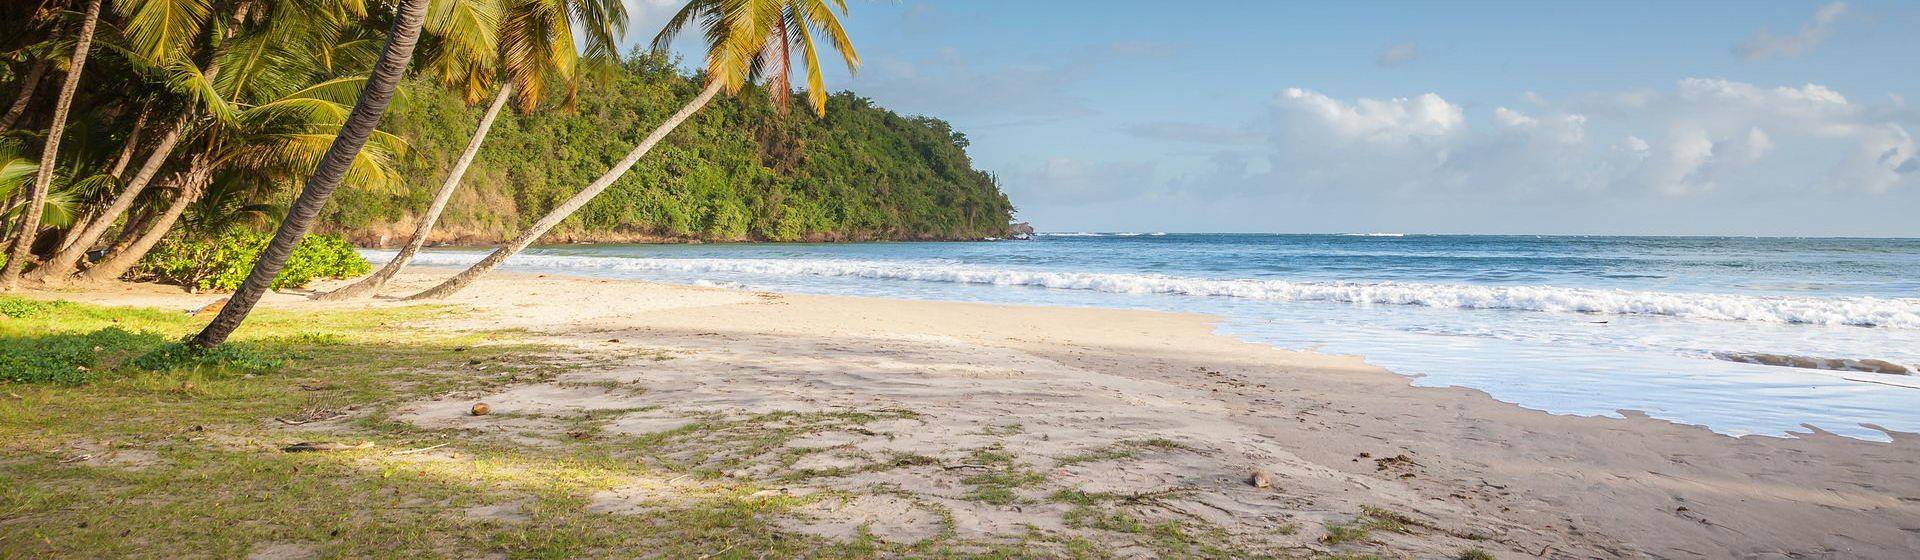 Holidays to Grenada Image